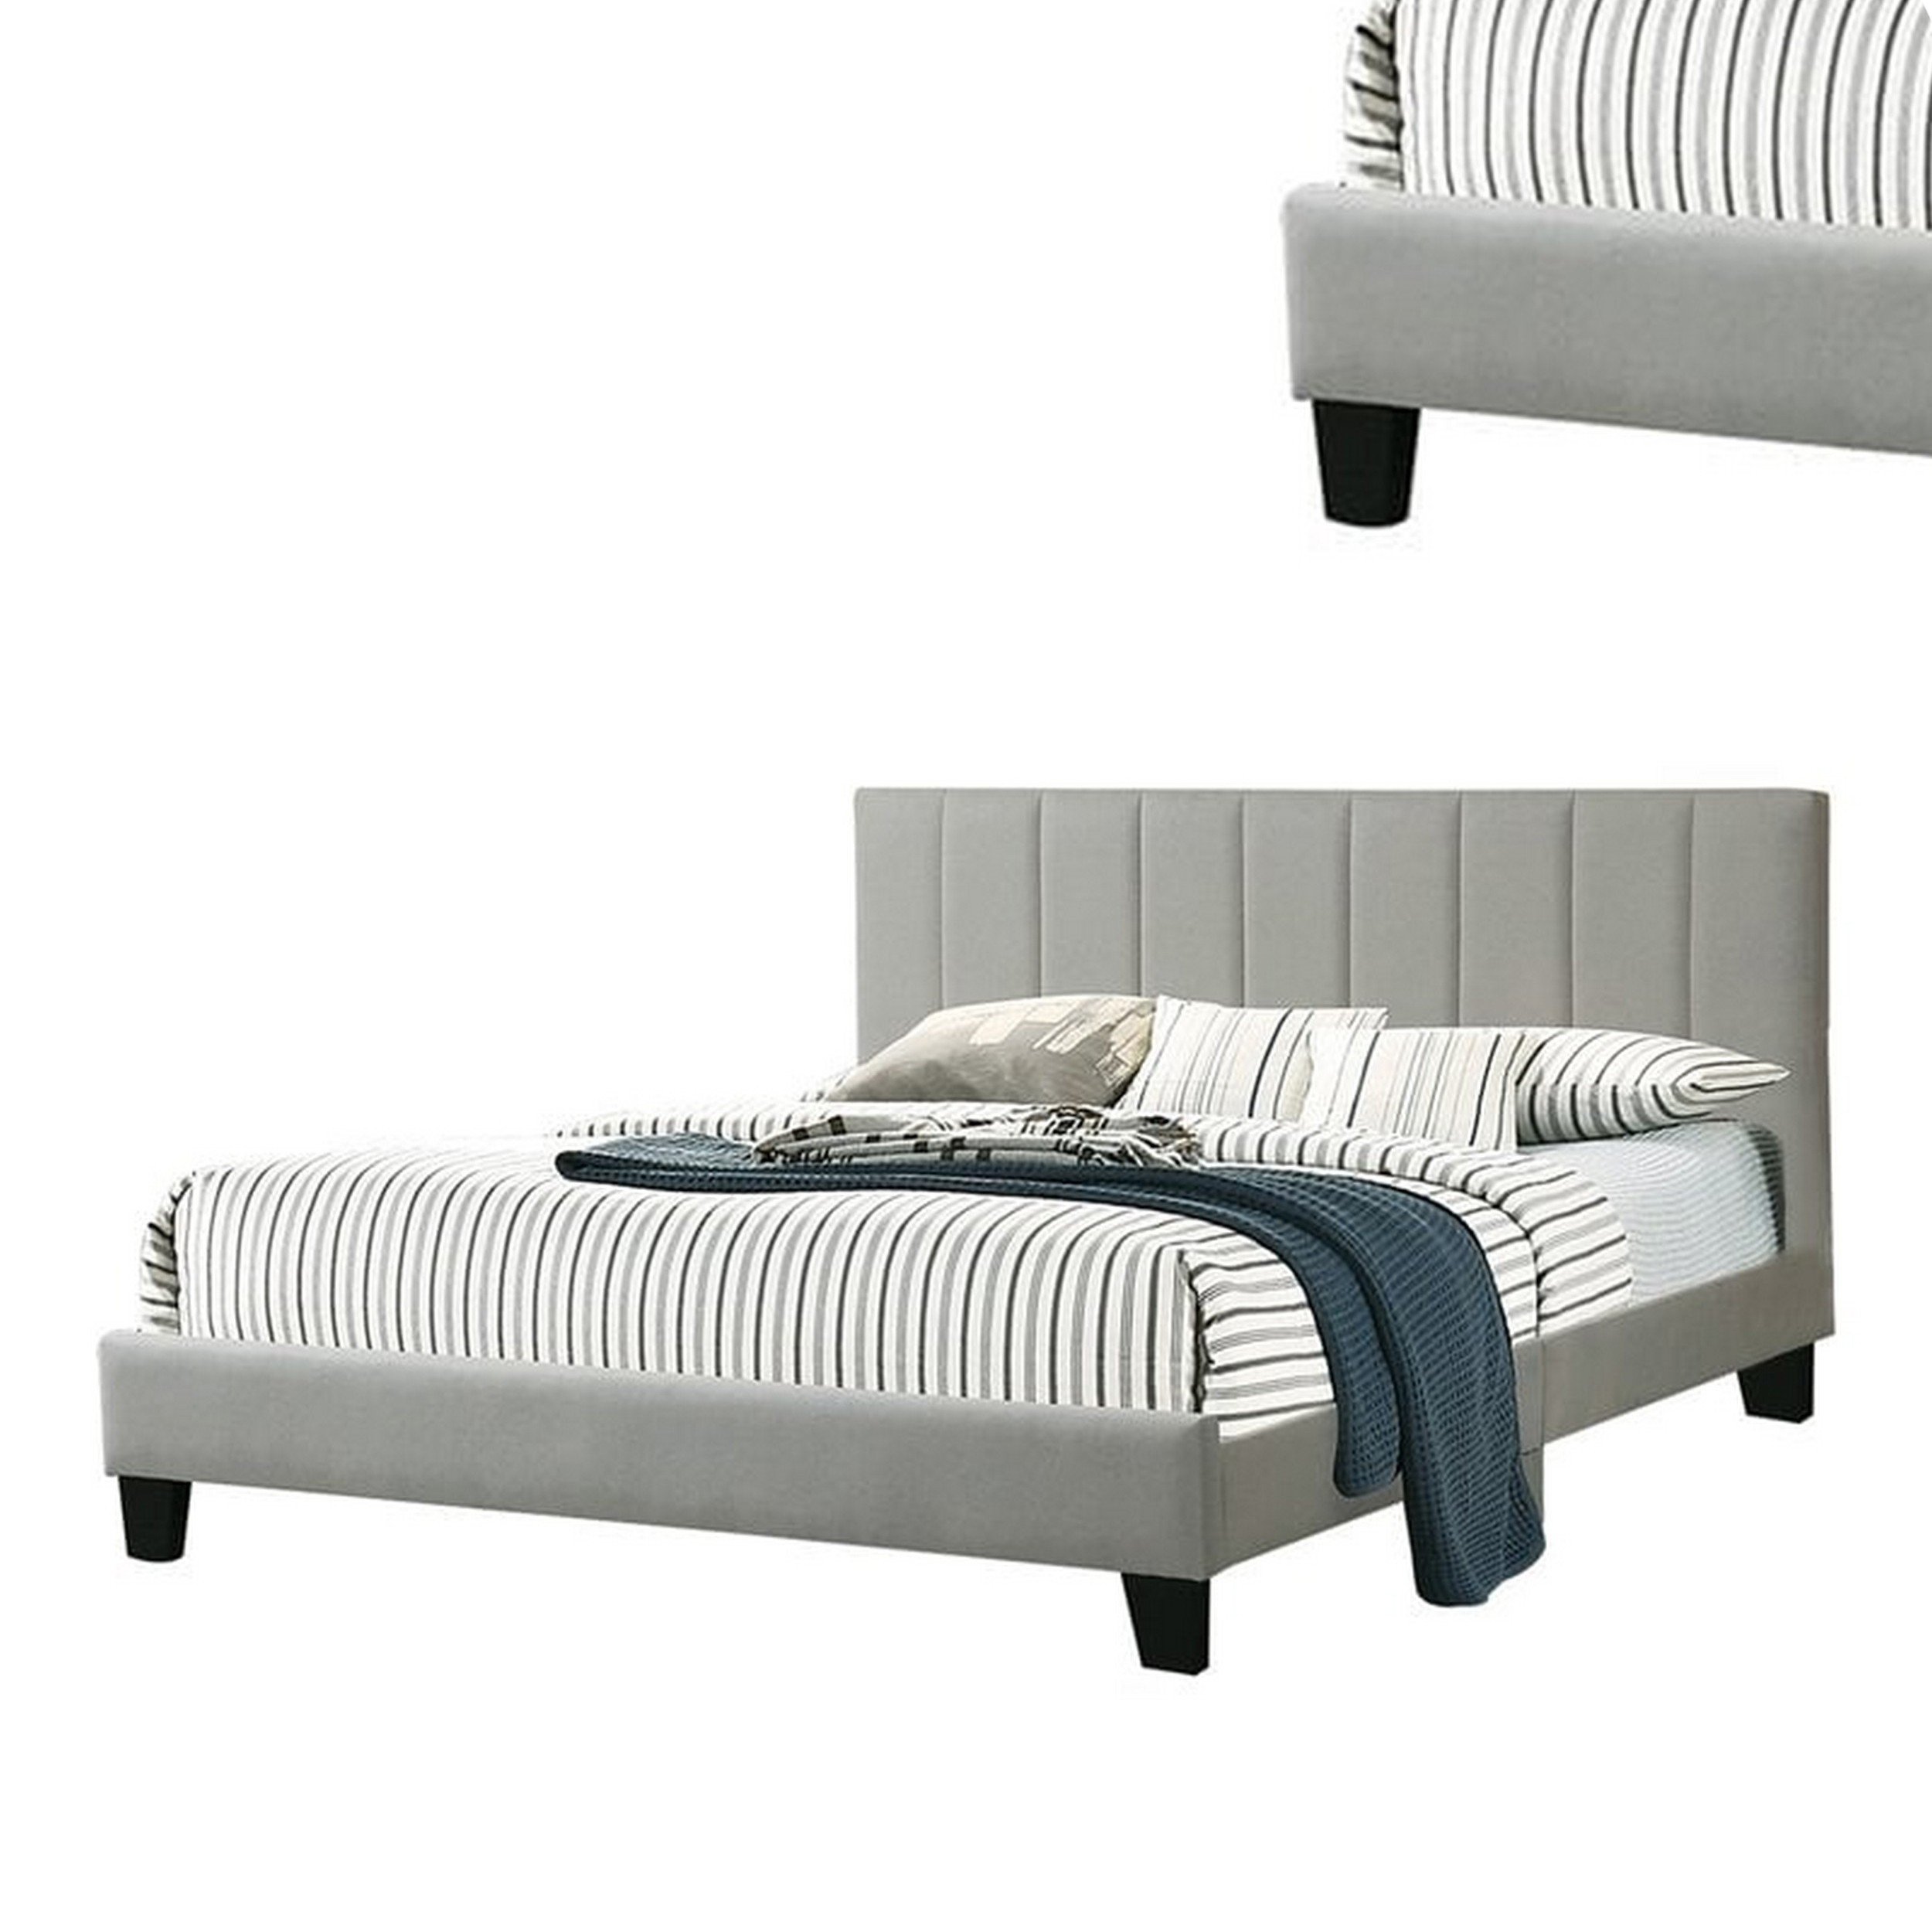 Eve Platform King Size Bed, Vertical Channel Tufted Light Gray Upholstery- Saltoro Sherpi